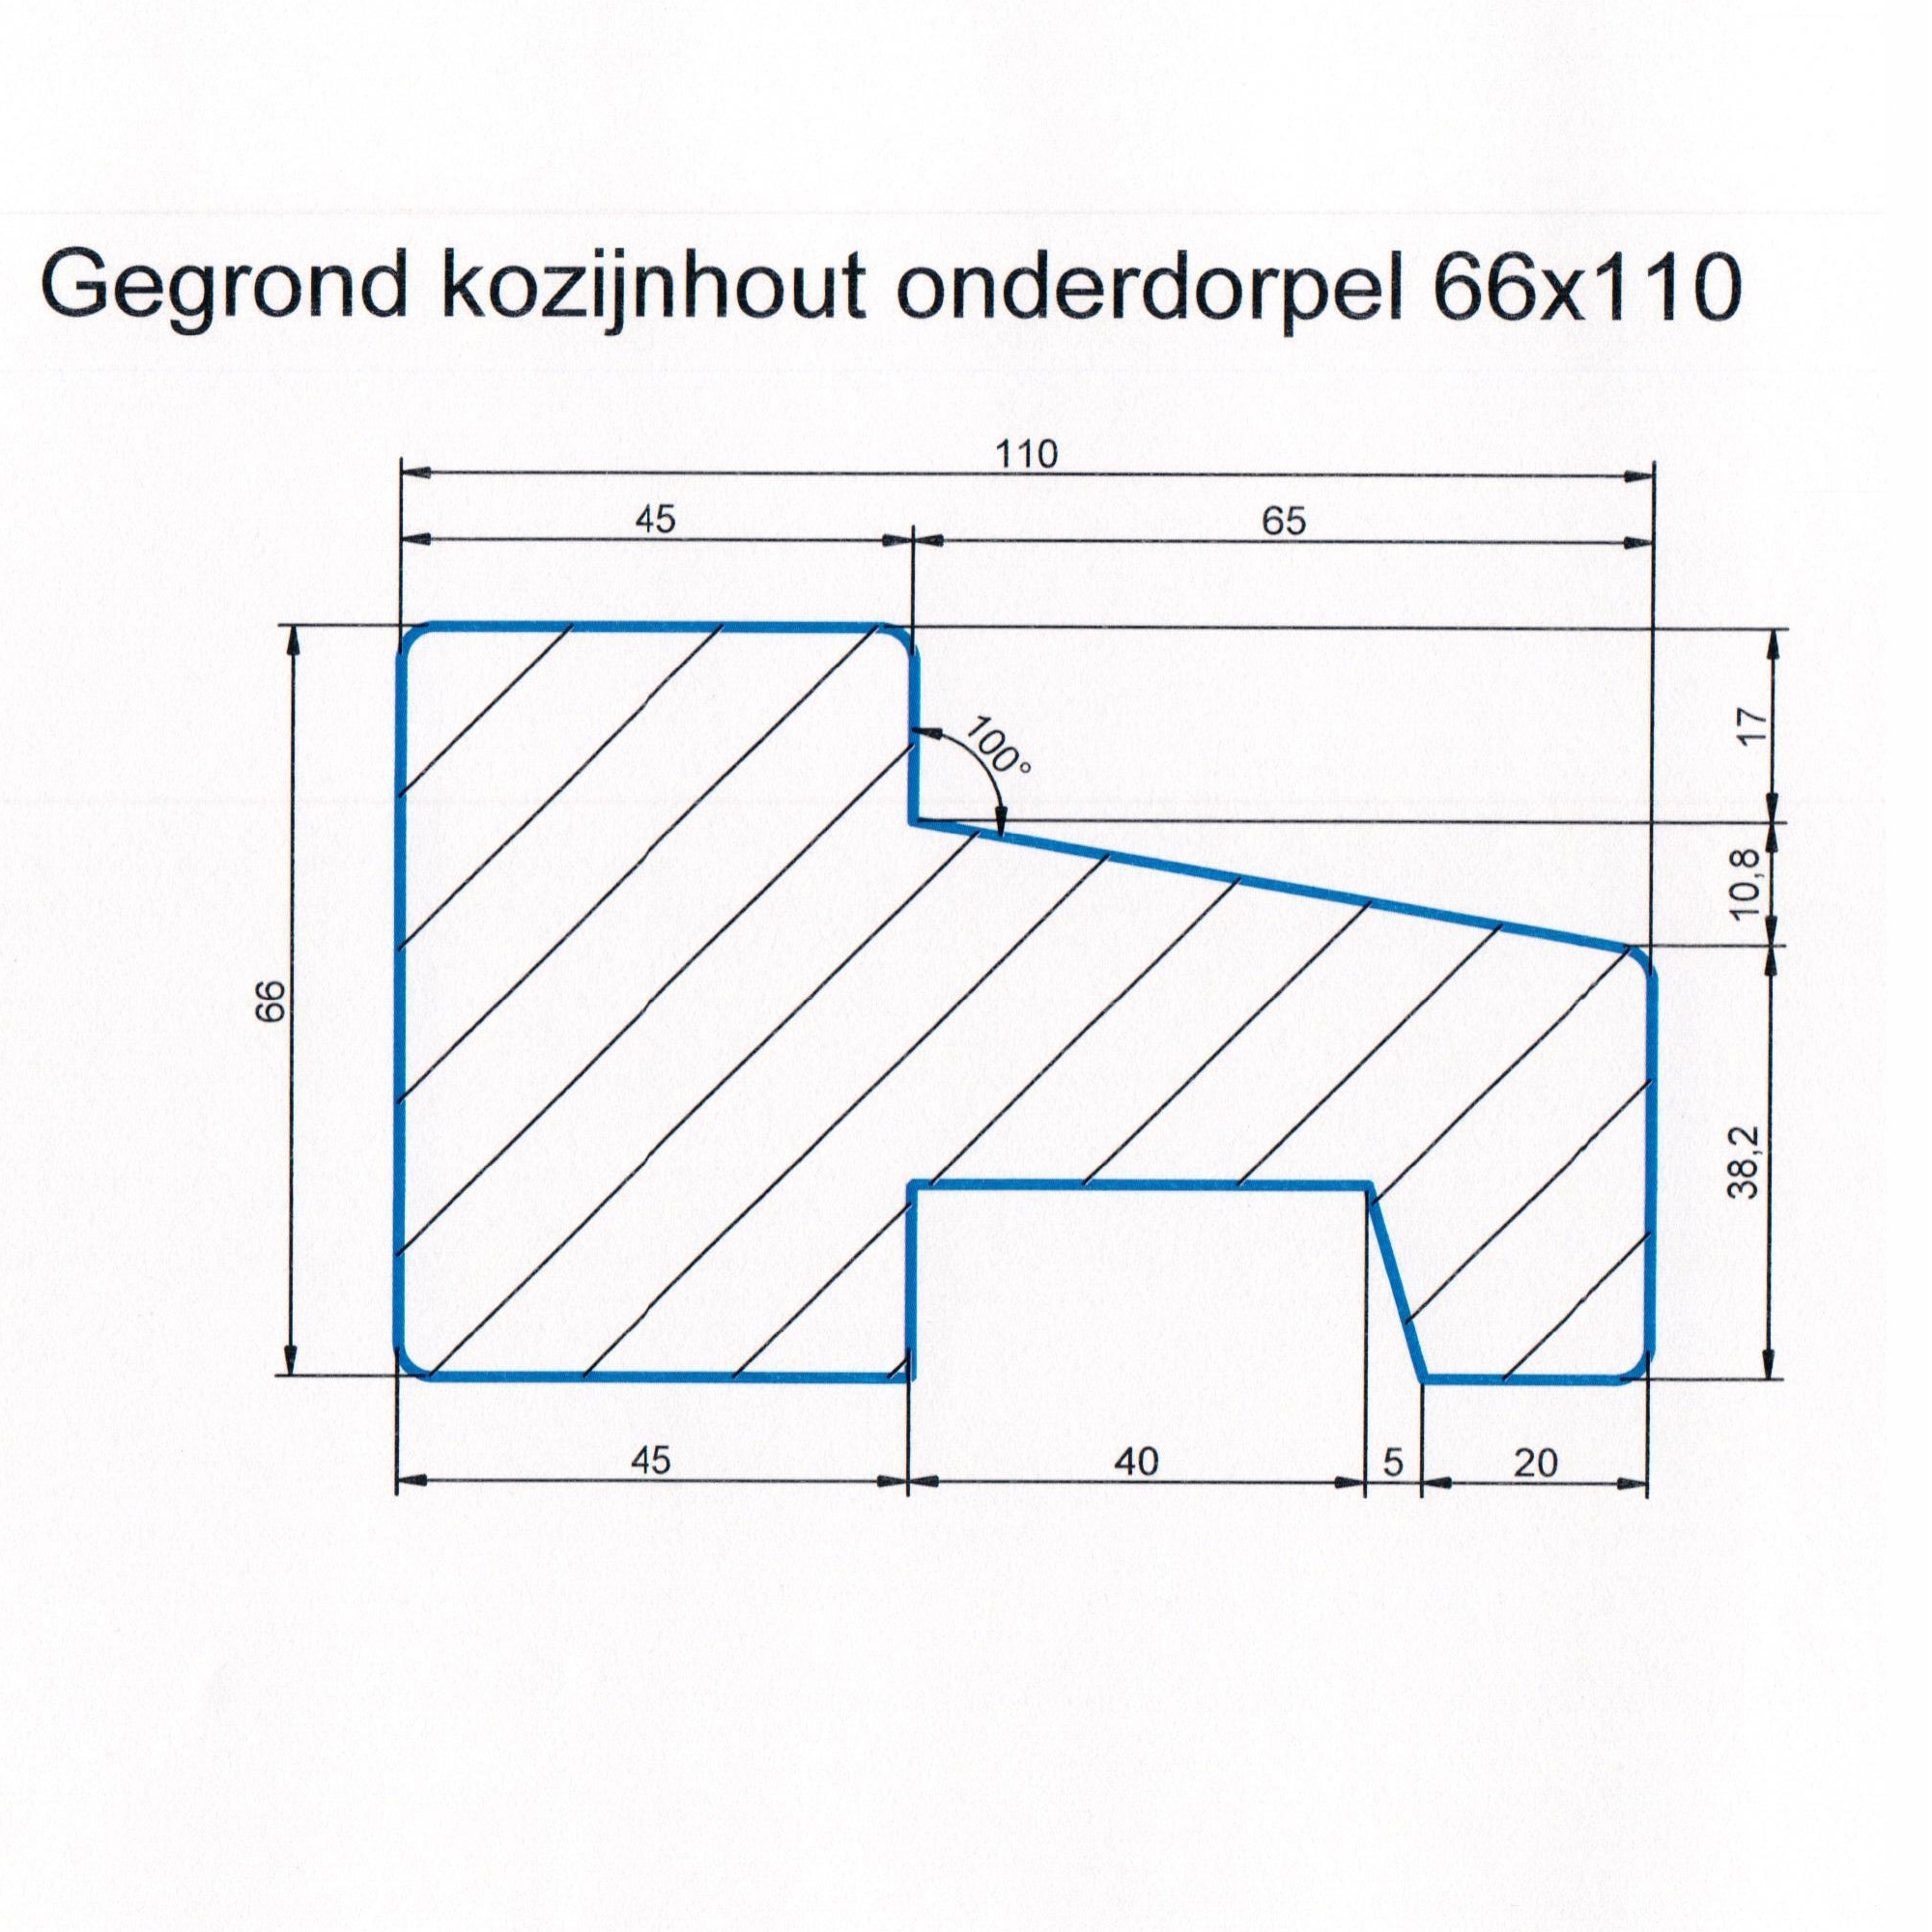 Hardhout 66x110 kozijnhout gegrond L=5900 onderdorpel